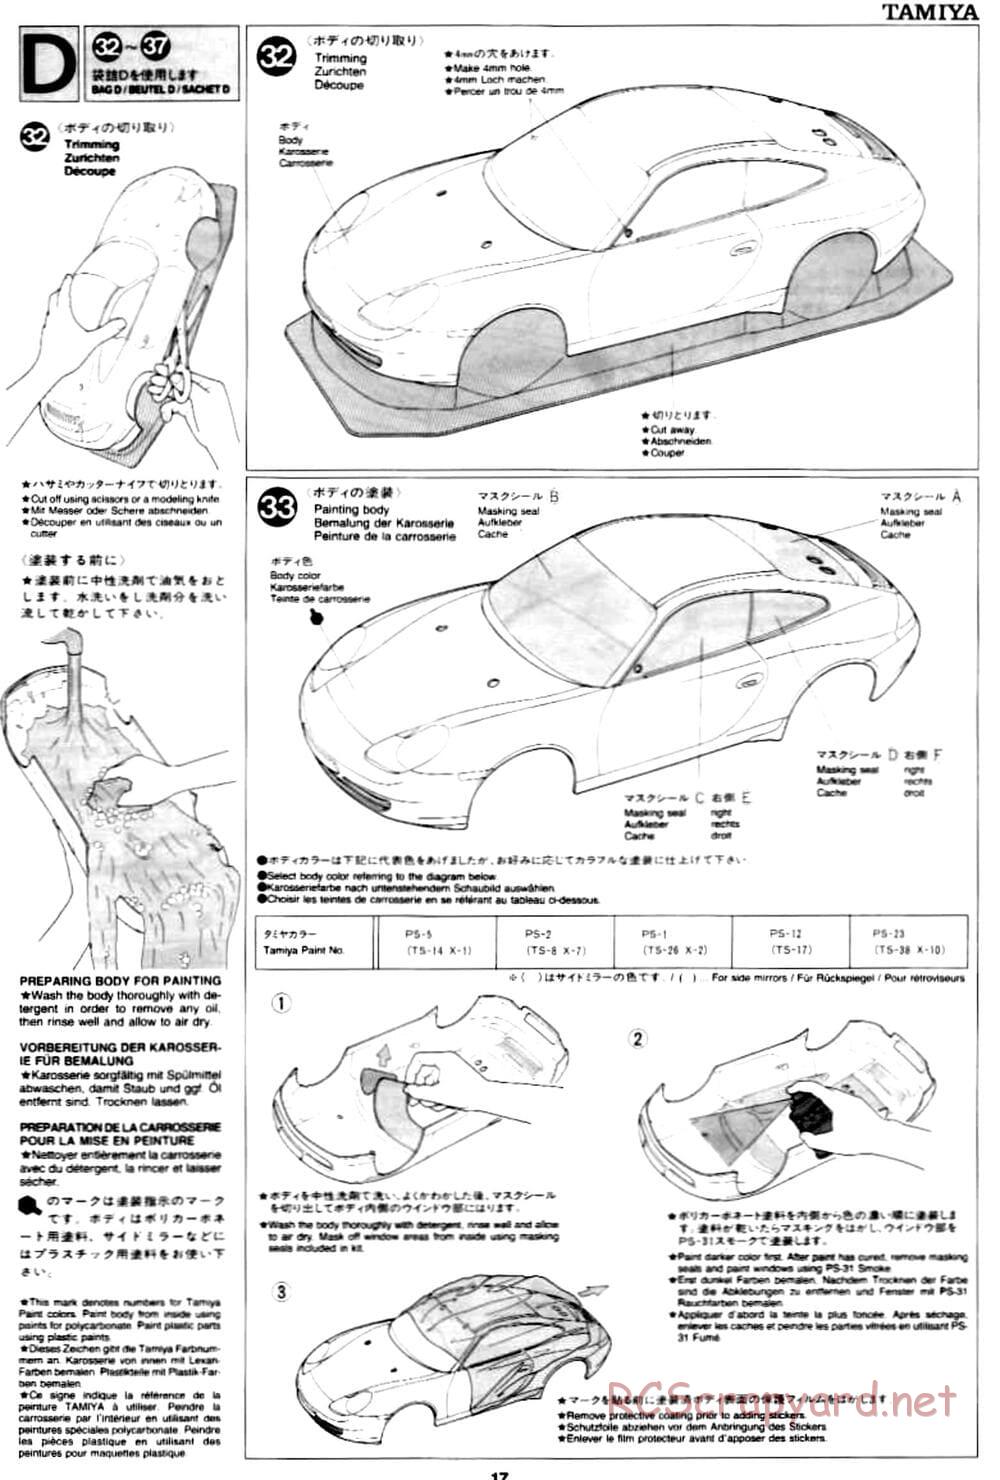 Tamiya - Porsche 911 Carrera - M02L Chassis - Manual - Page 17